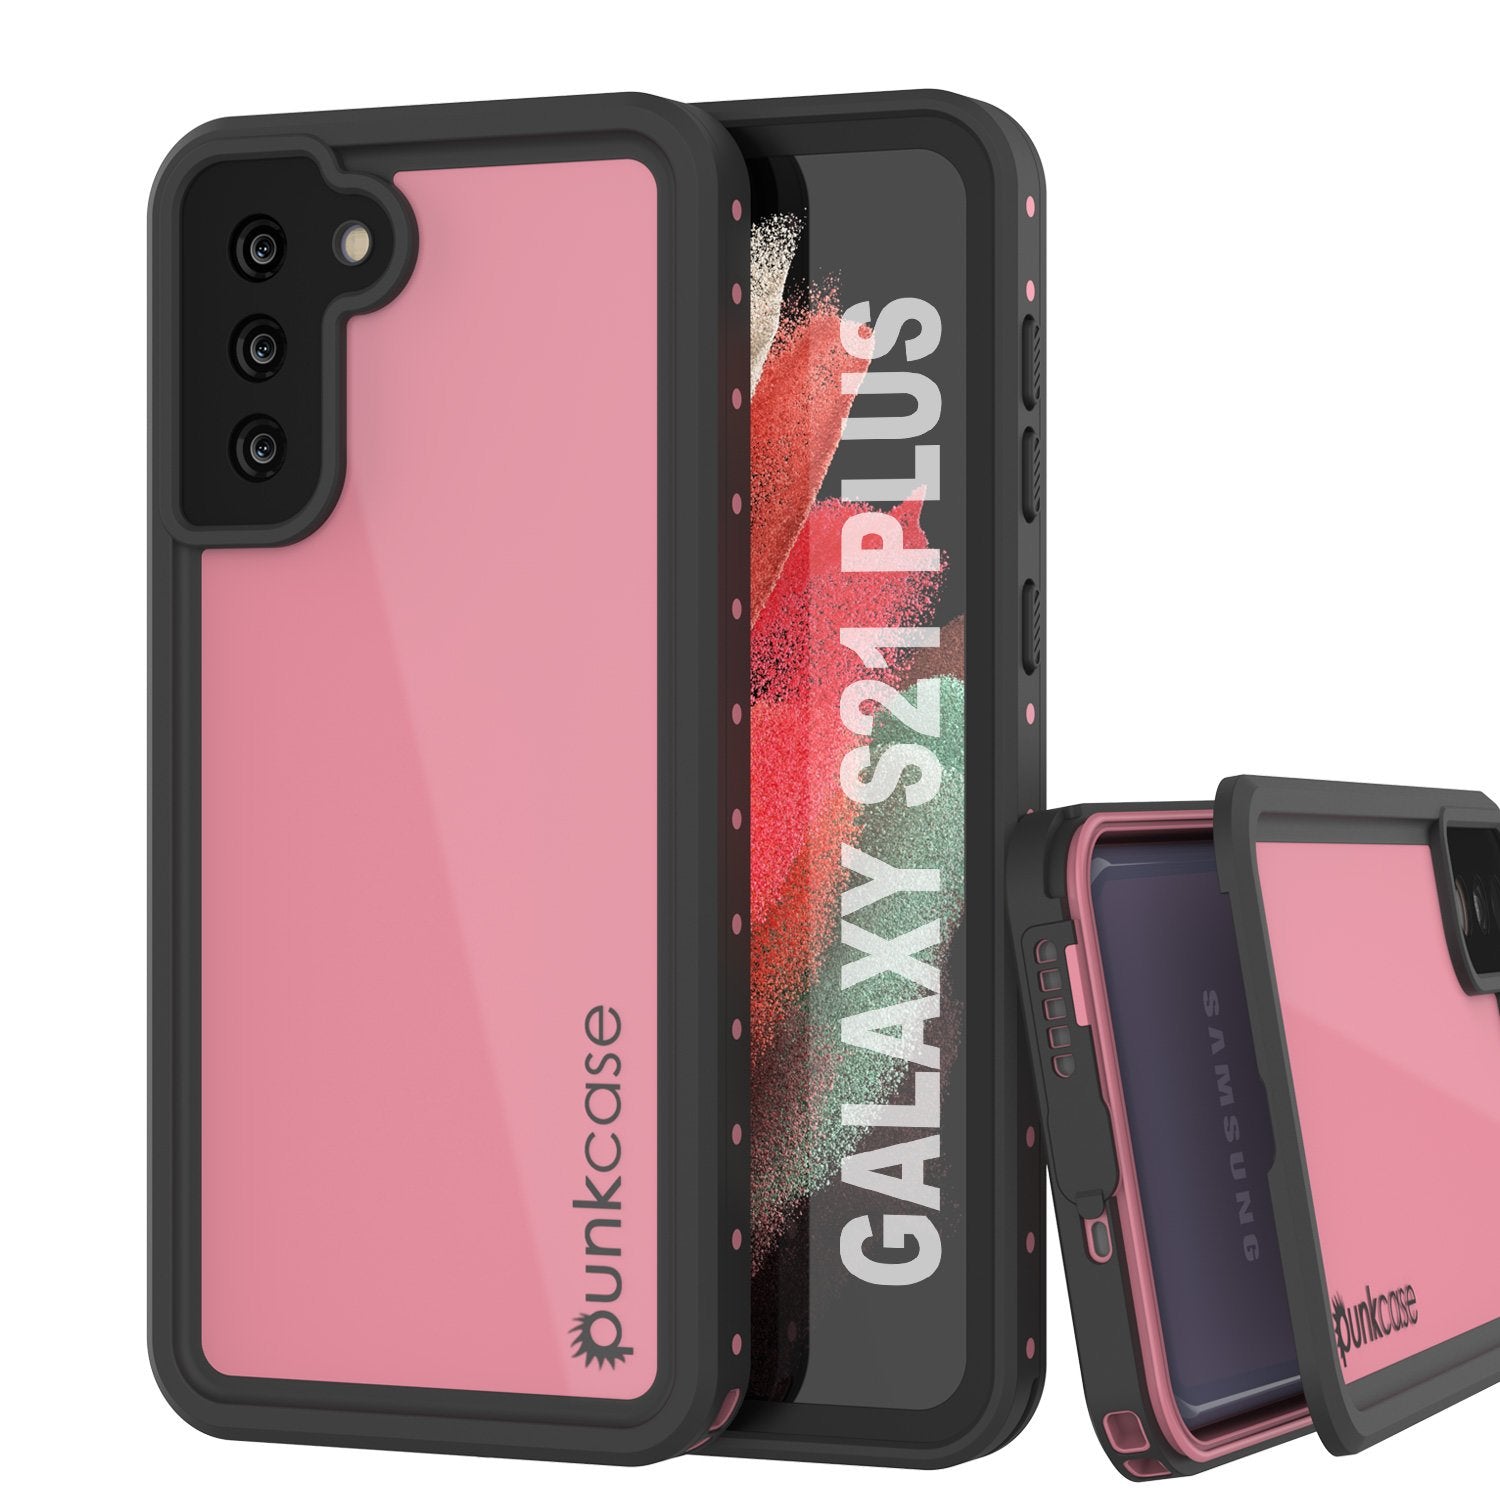 Galaxy S21+ Plus Waterproof Case PunkCase StudStar Pink Thin 6.6ft Underwater IP68 Shock/Snow Proof (Color in image: pink)